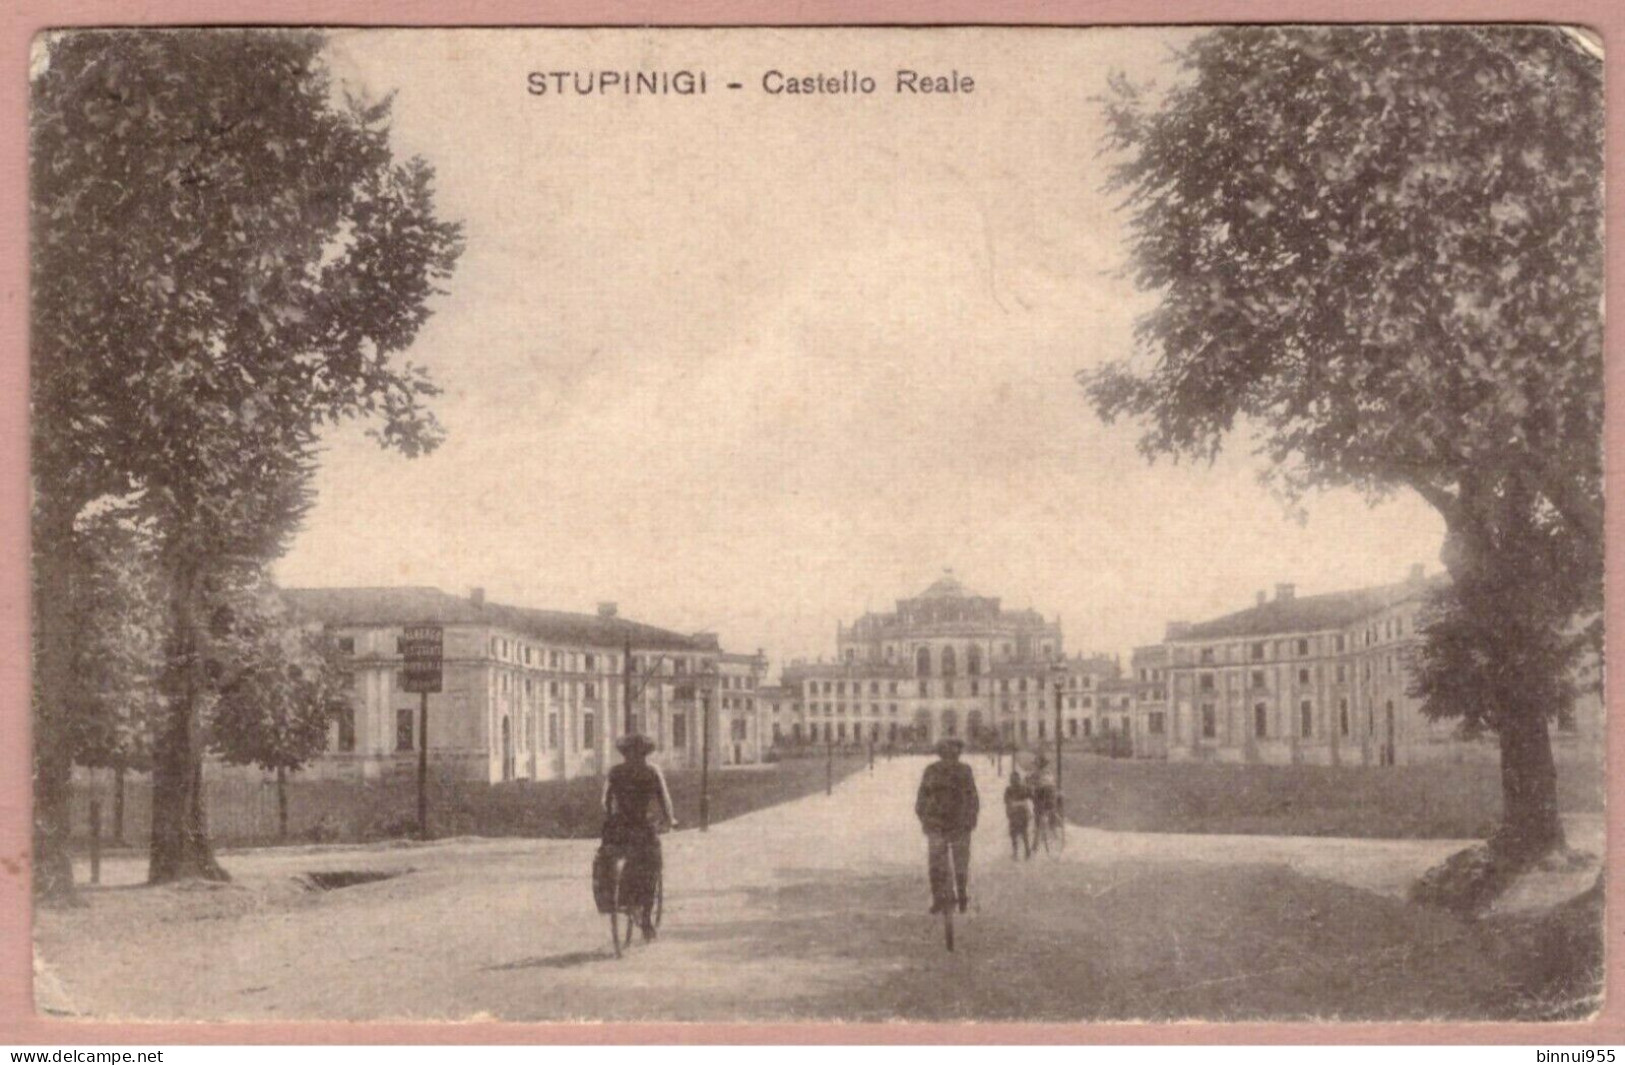 Cartolina Stupinigi Castello Reale - Viaggiata 1917 - Tarjetas Panorámicas